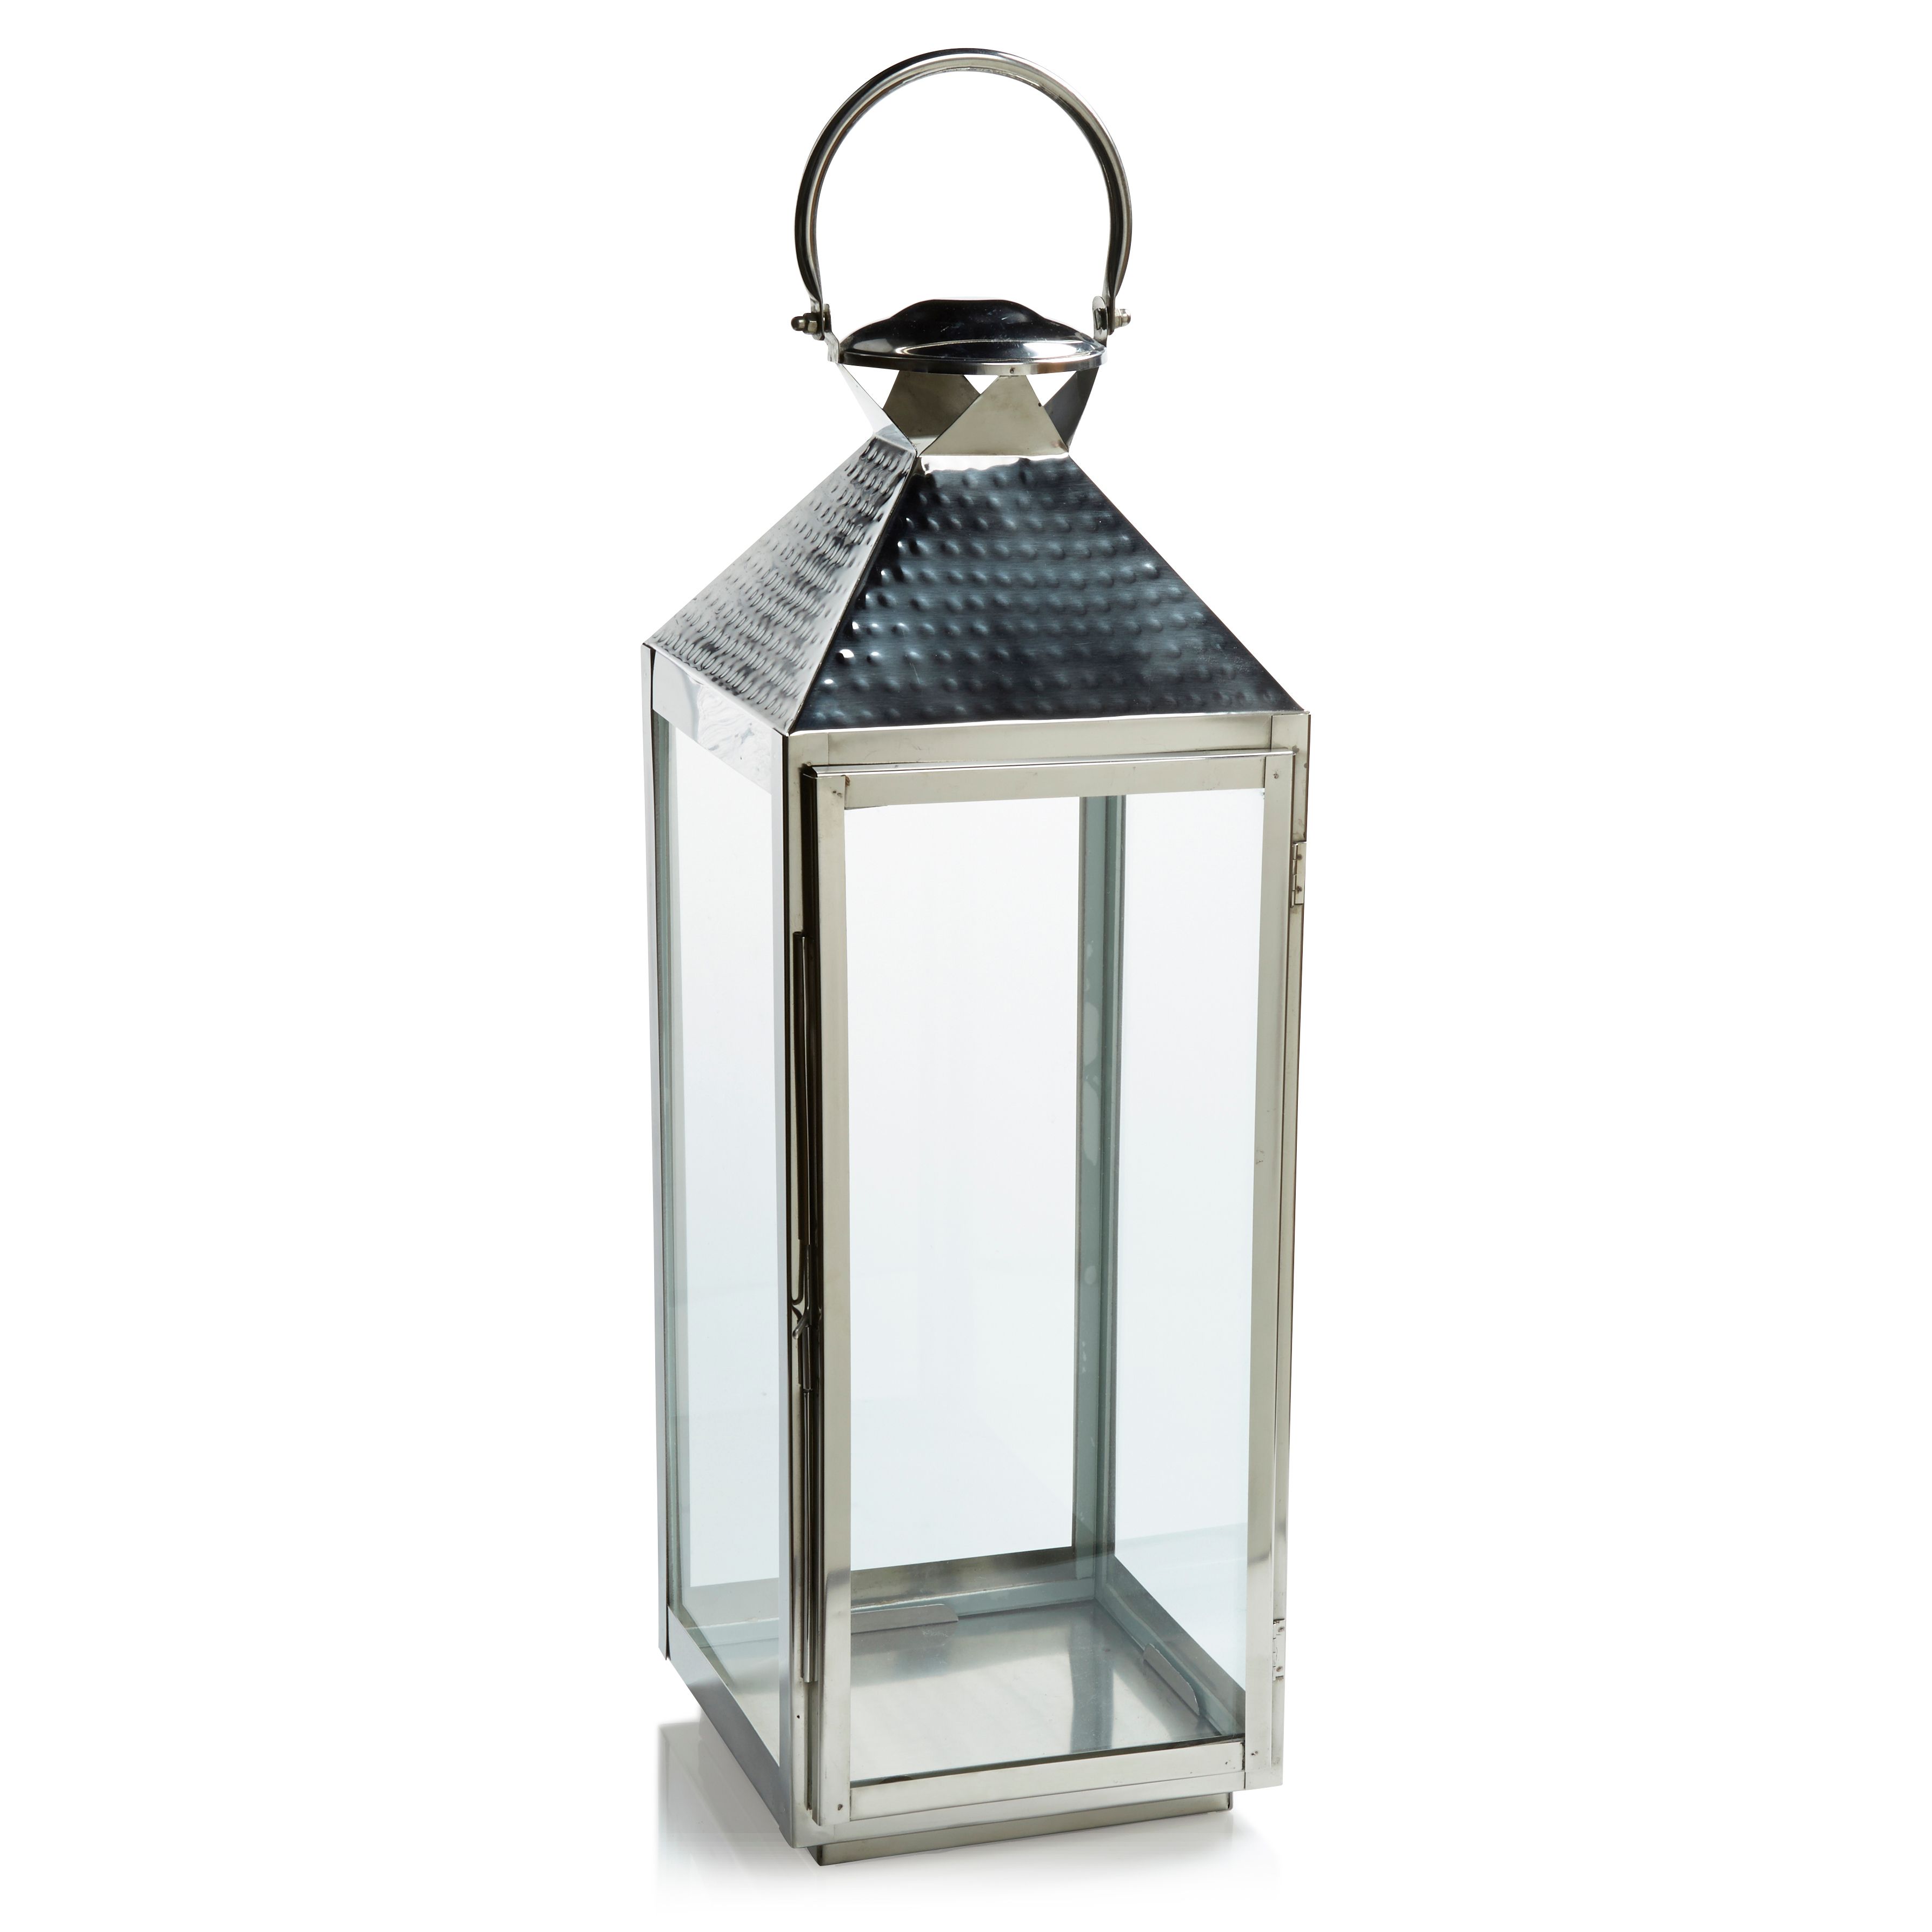 The lantern glass photo